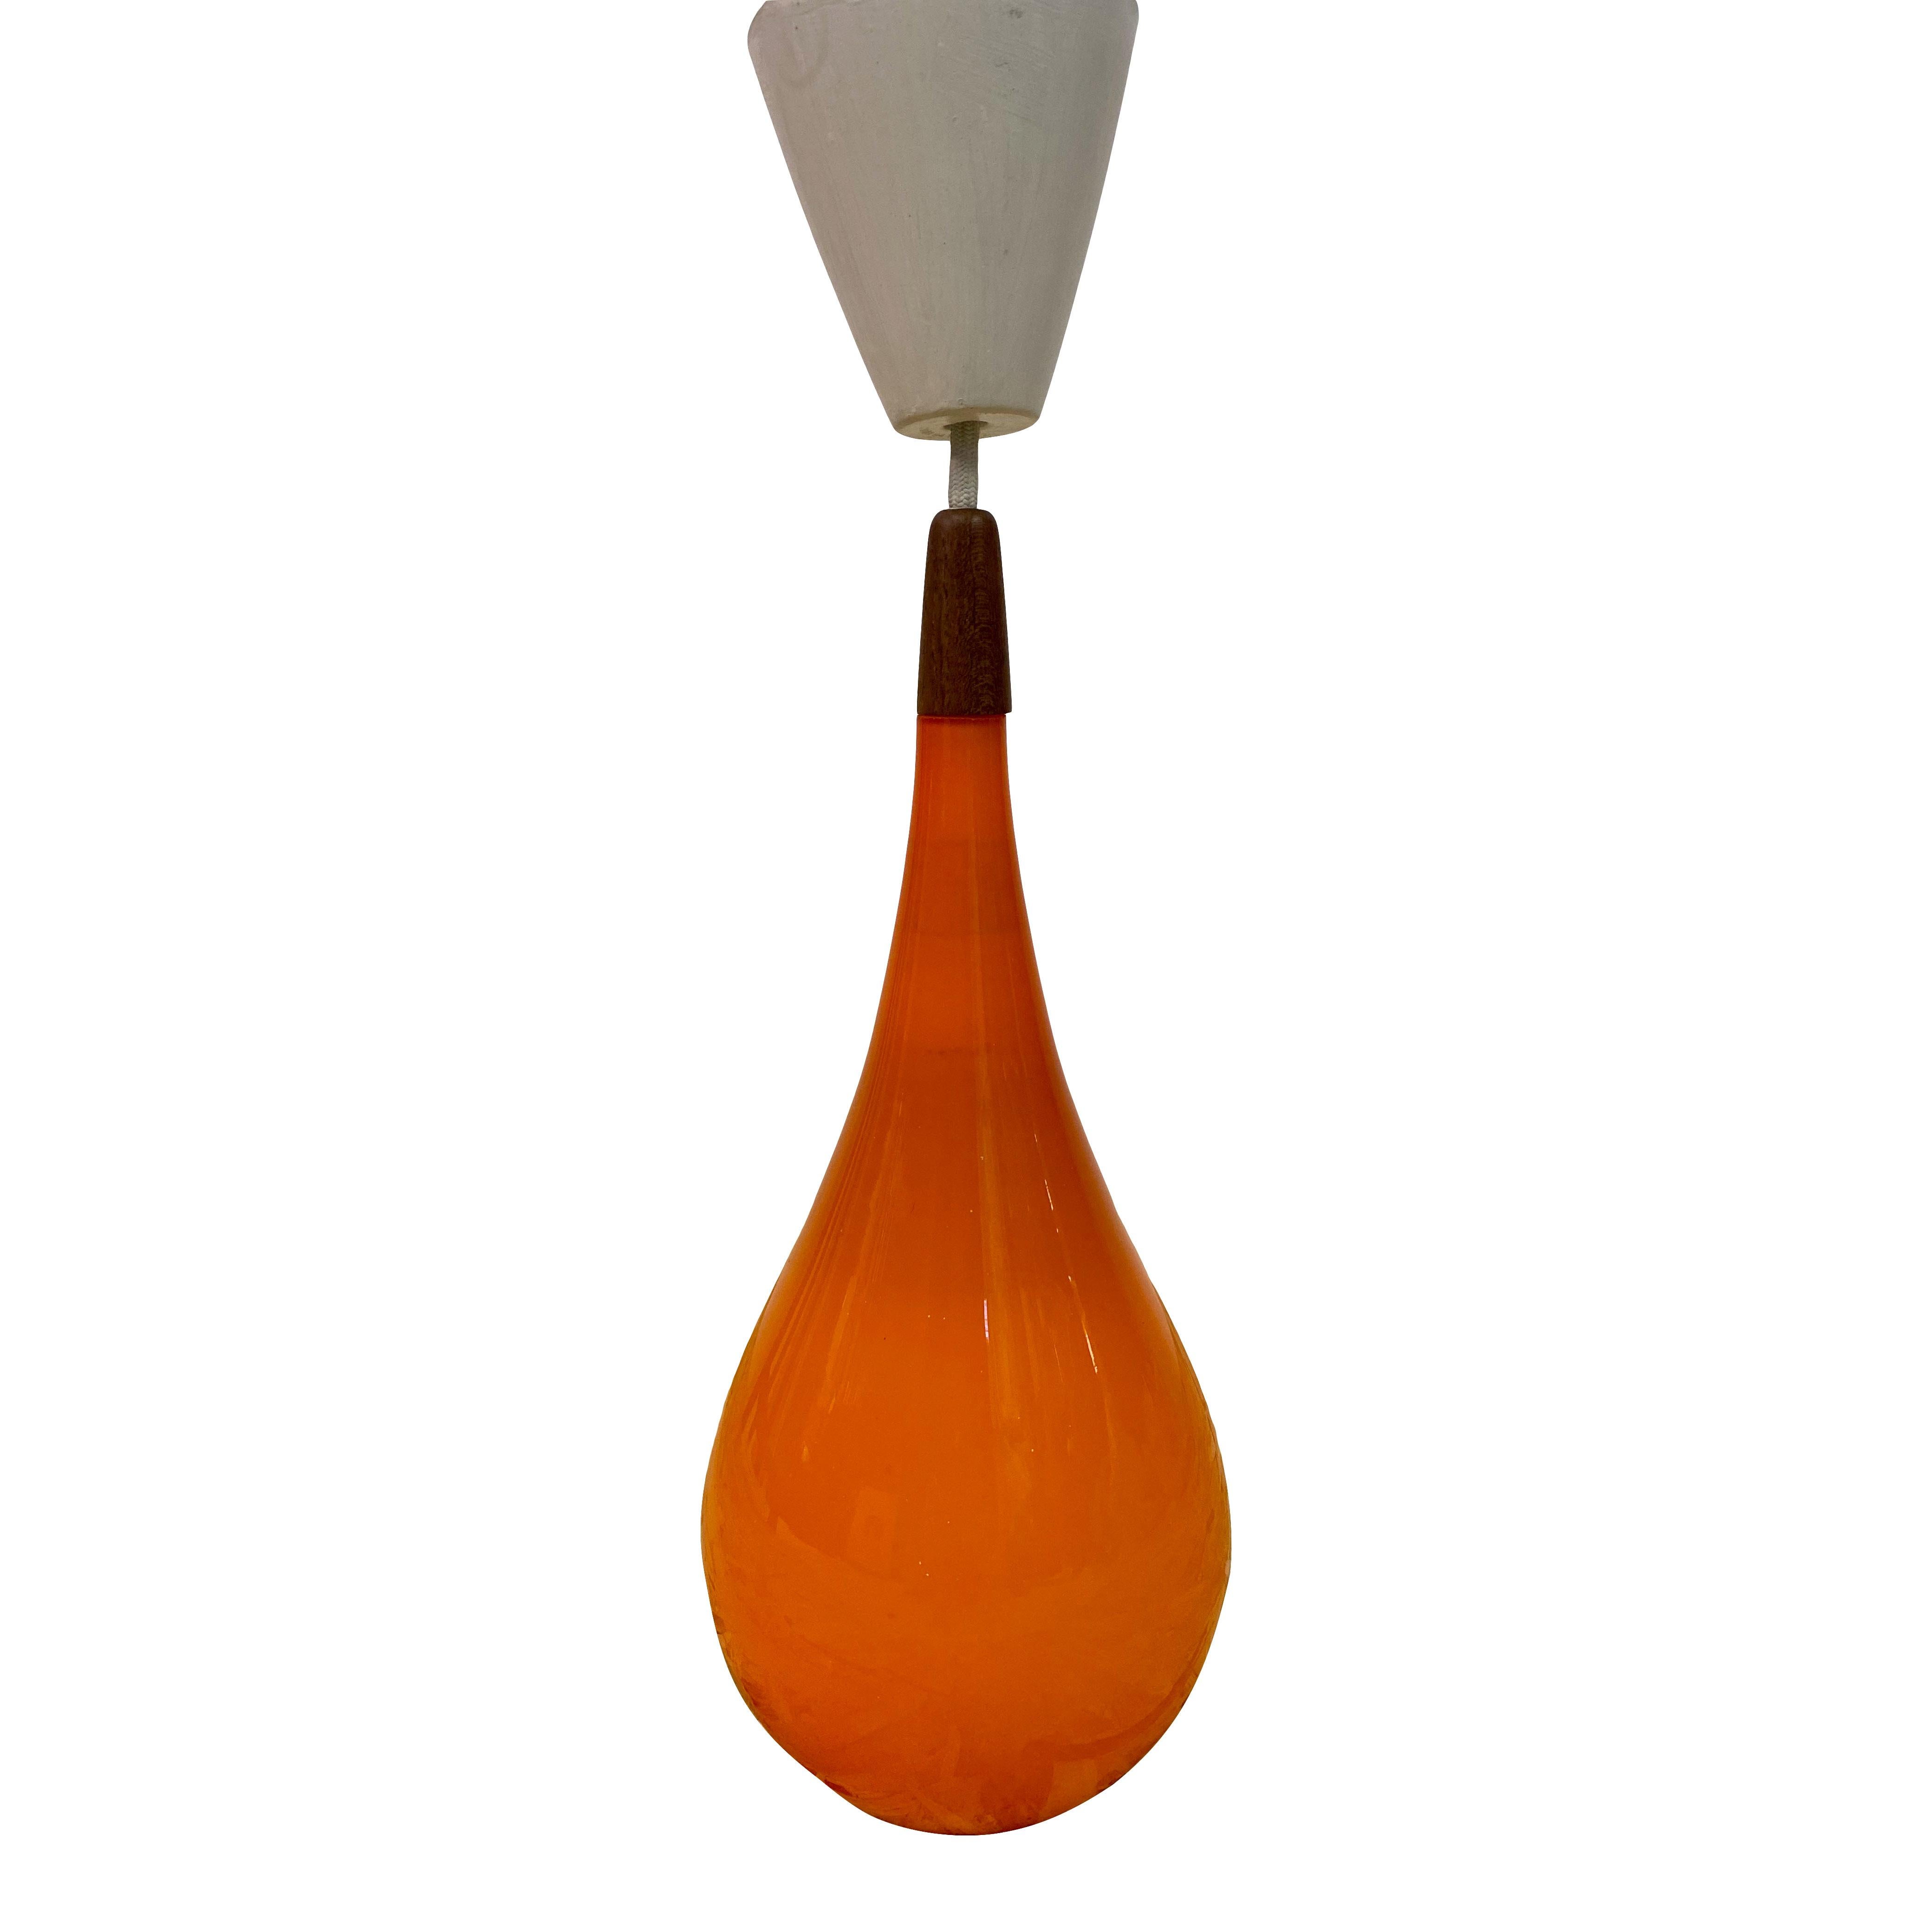 Orange glass pendant

By Holmegaard

Stamped made in Denmark on inner cork stopper

Teak top

Denmark 1960s.